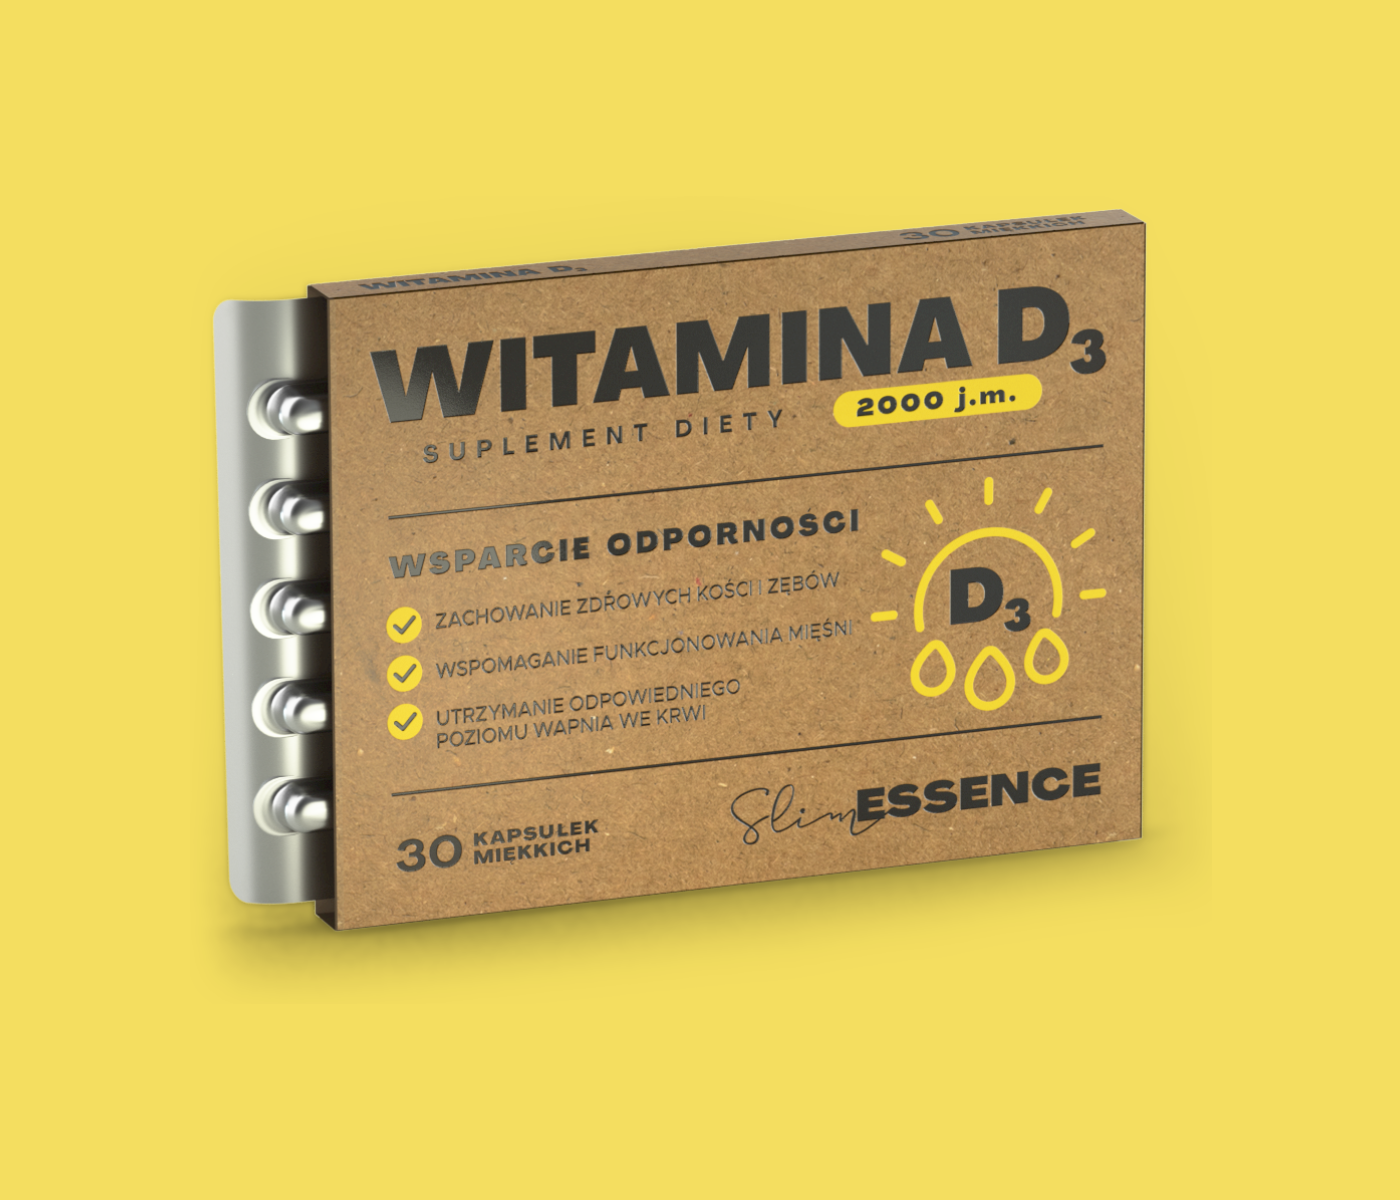 Vitamin D3 Essence - Packshot